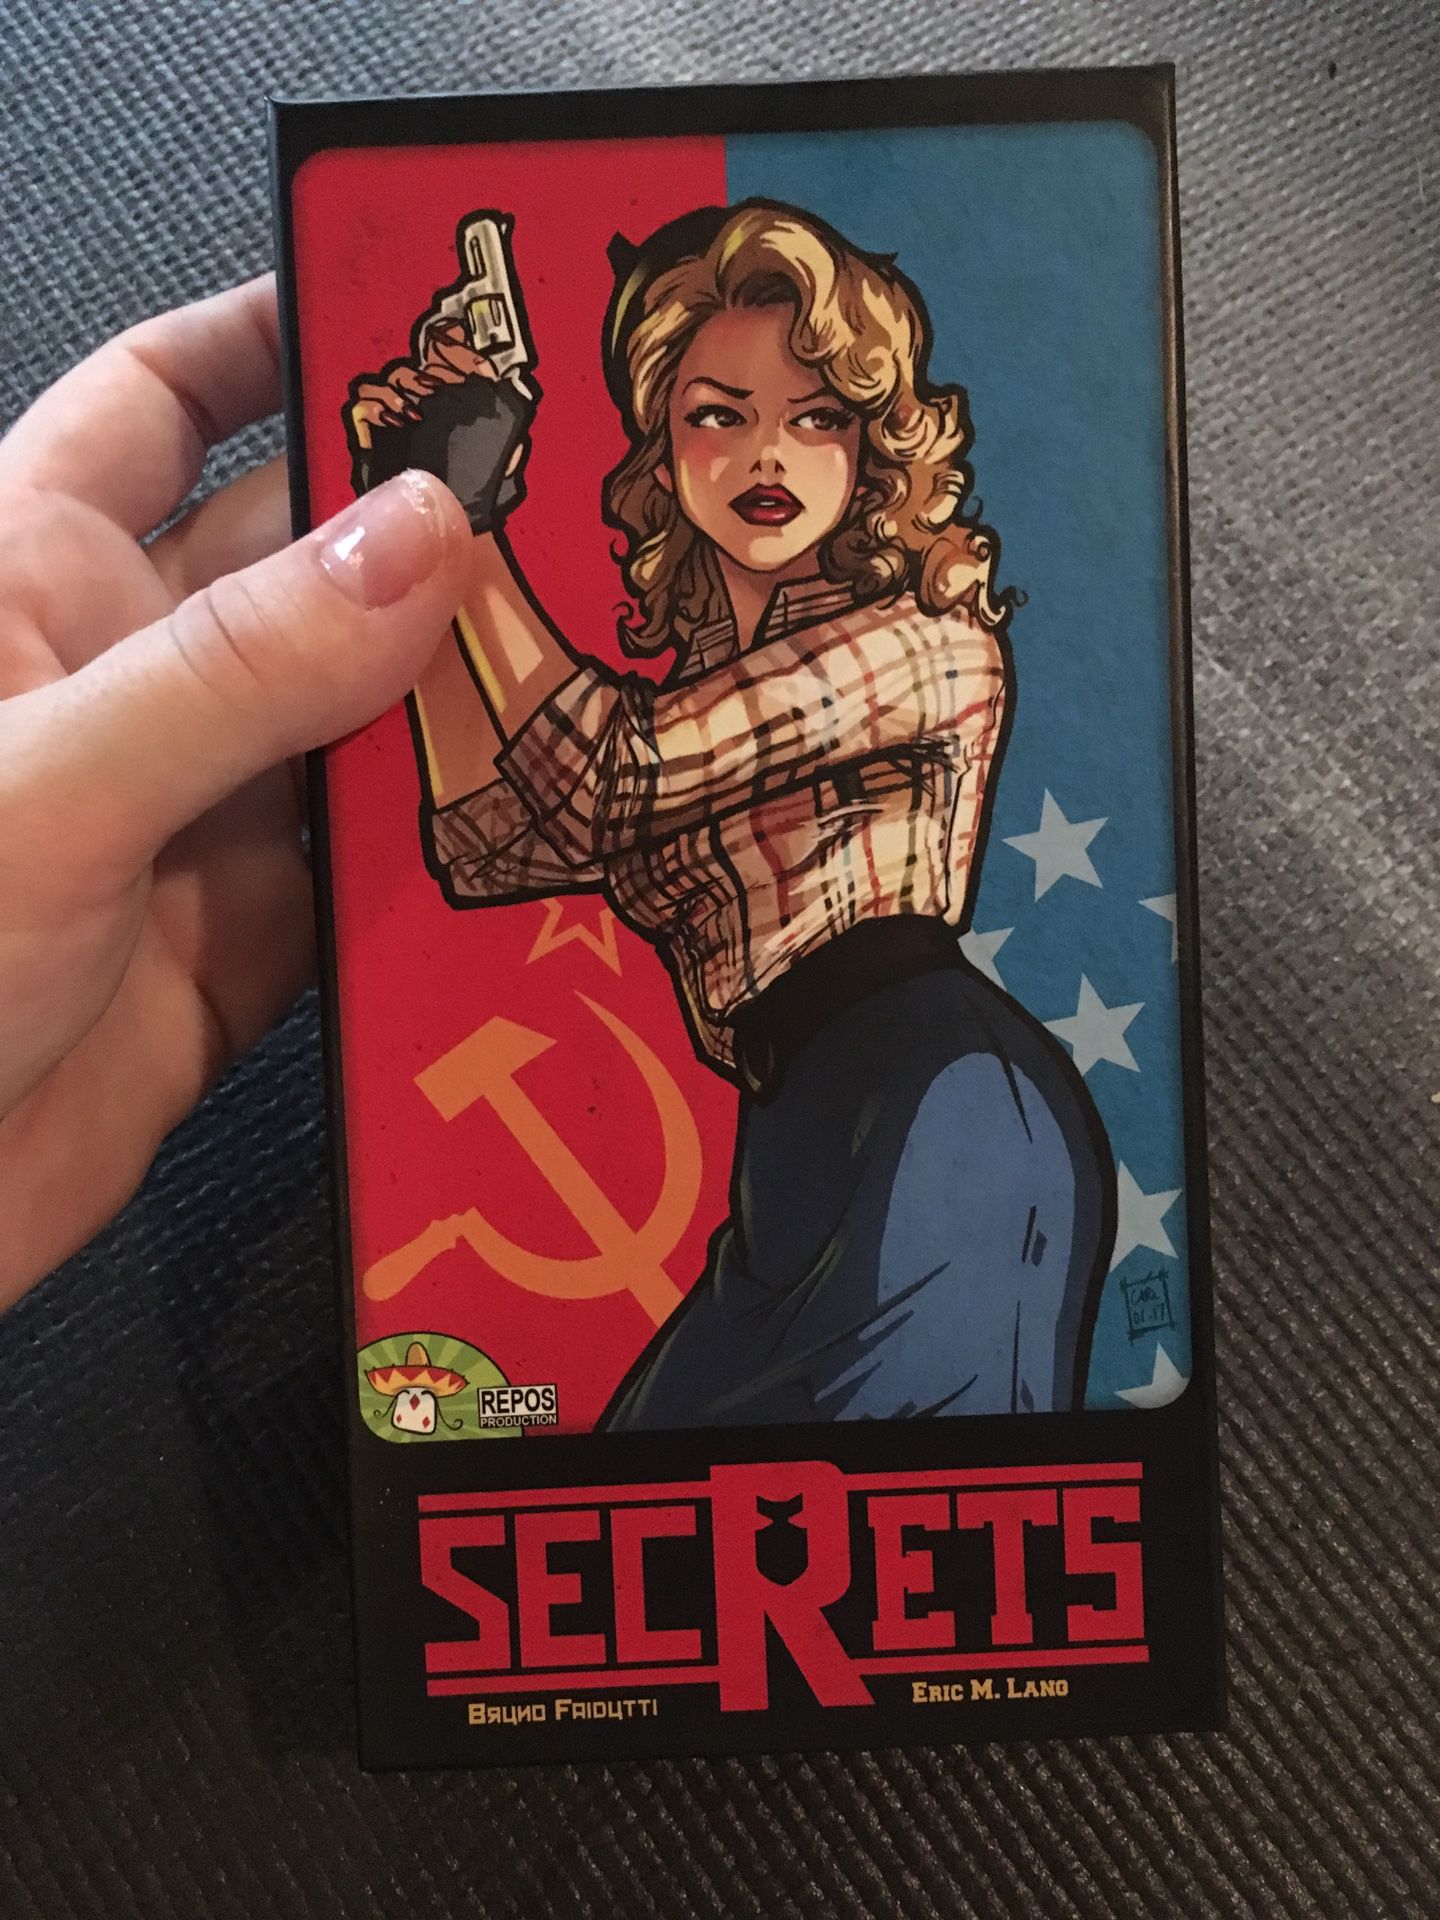 Secrets Board game